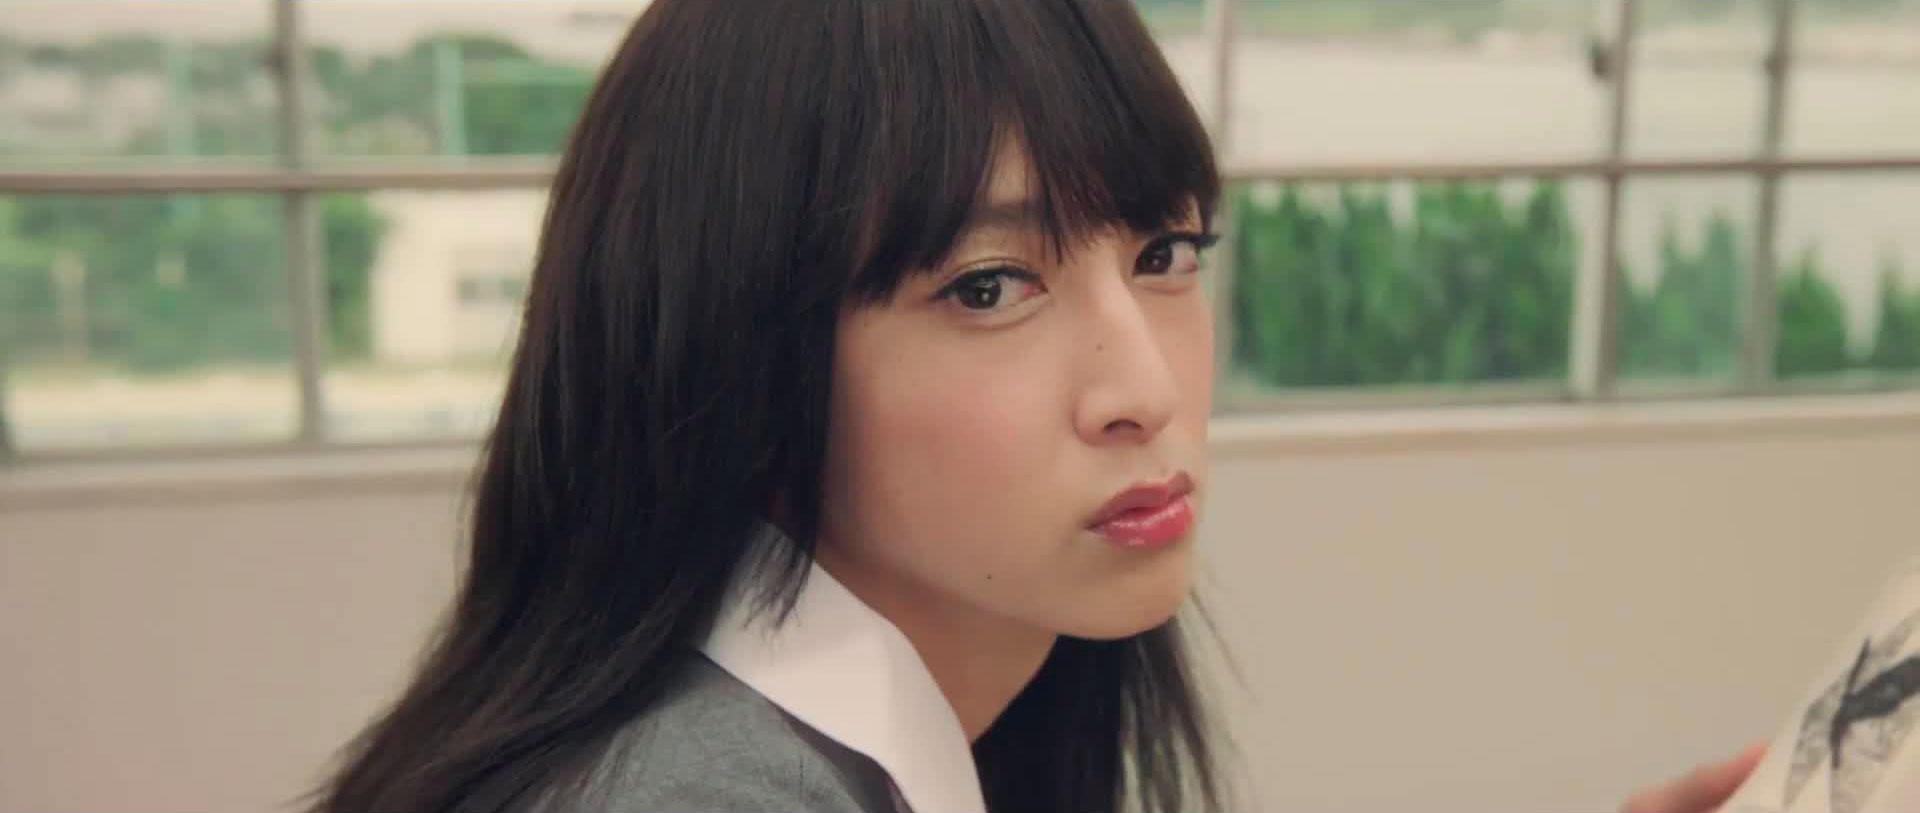 Understanding beauty: Shiseido’s High School Girl?